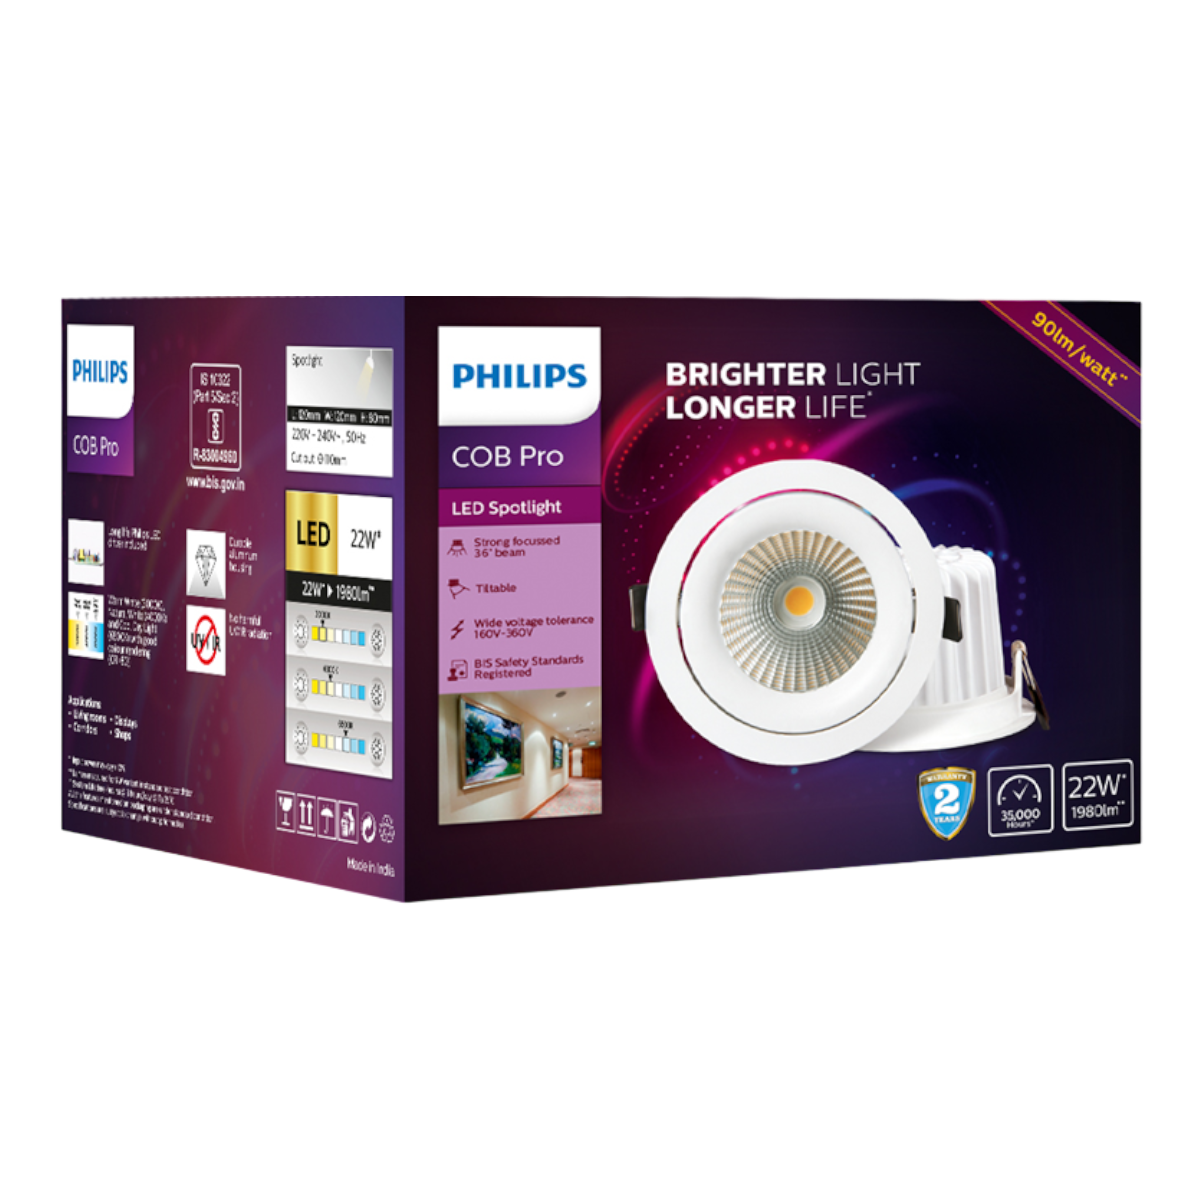 Buy Philips LED COB Pro  Philips lighting – Philips lighting Online Store